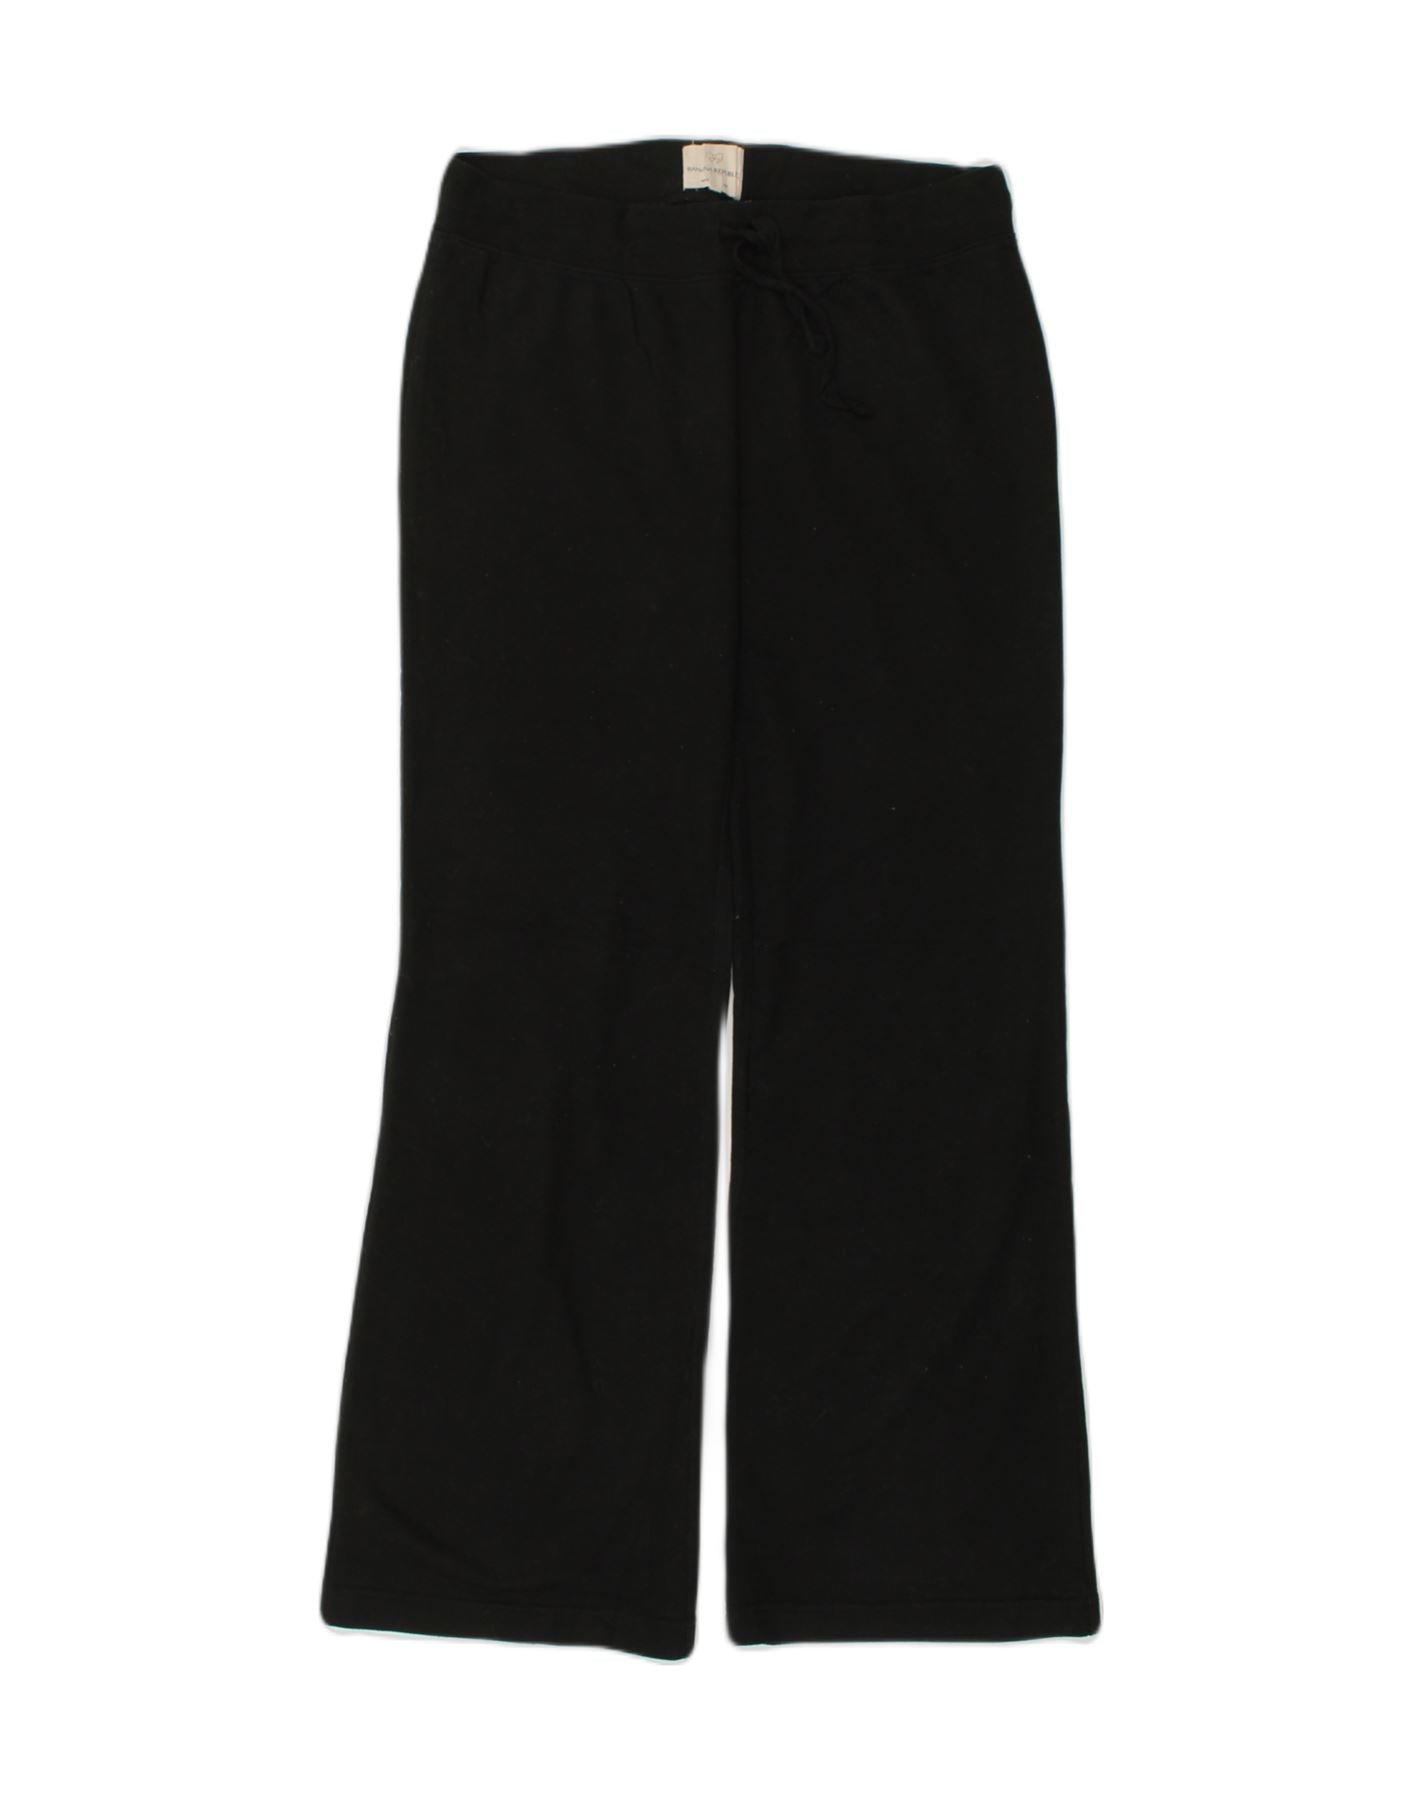 BANANA REPUBLIC Womens Tracksuit Trousers UK 14 Medium Black Cotton, Vintage & Second-Hand Clothing Online